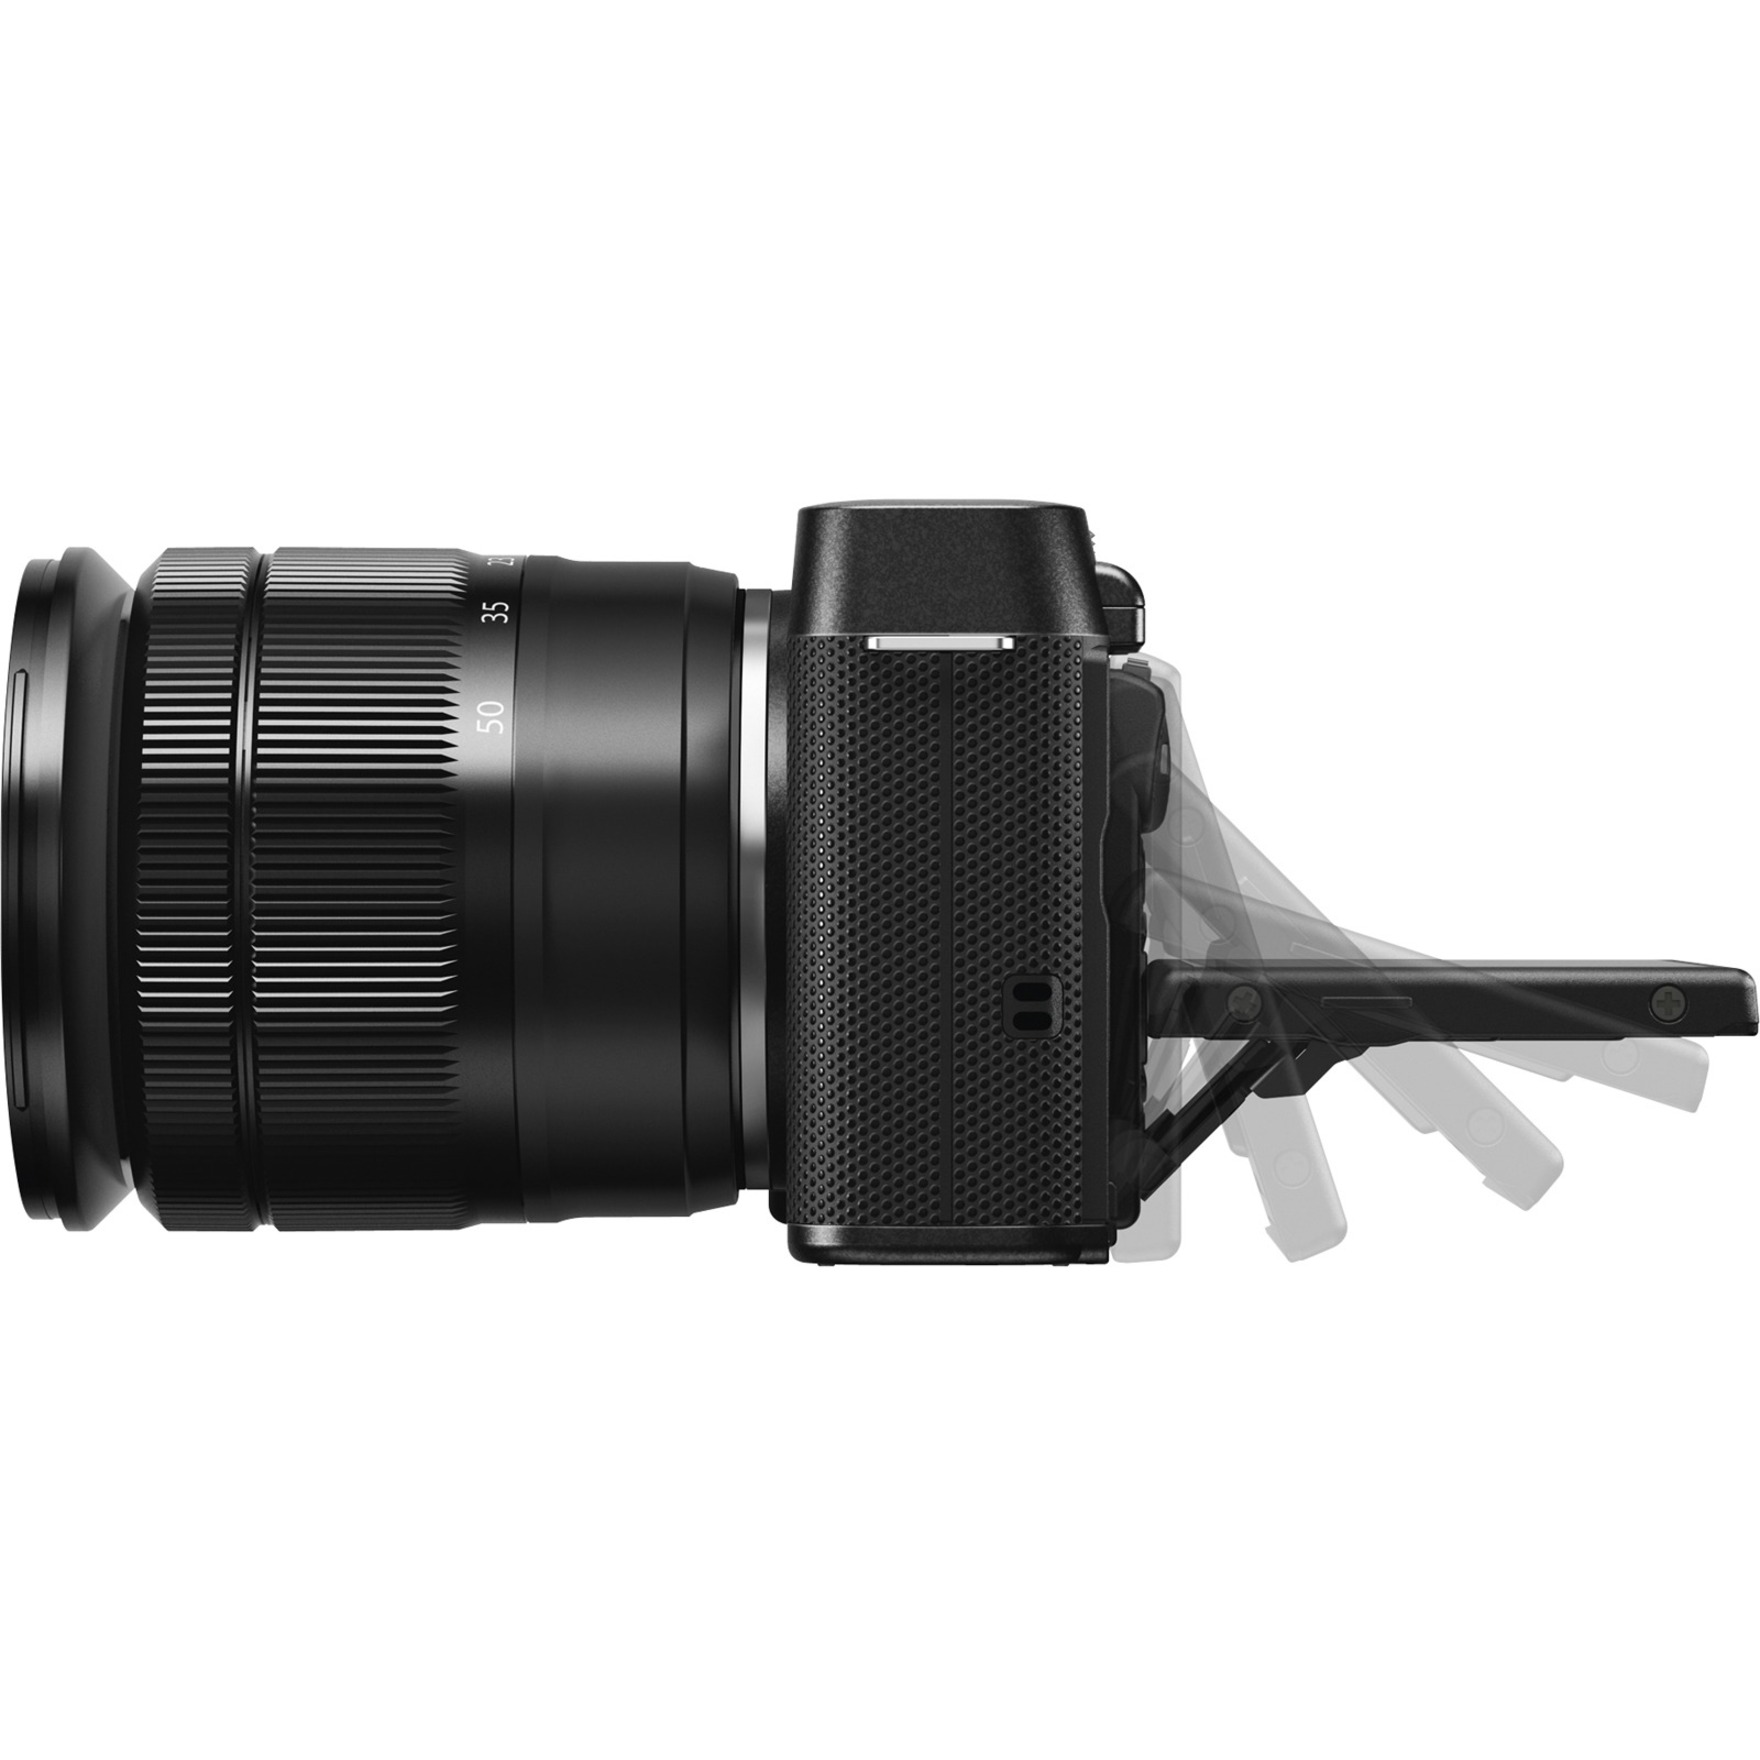 Fujifilm X-A1 16.3 Megapixel Mirrorless Camera with Lens, 0.63", 1.97", Black - image 3 of 7